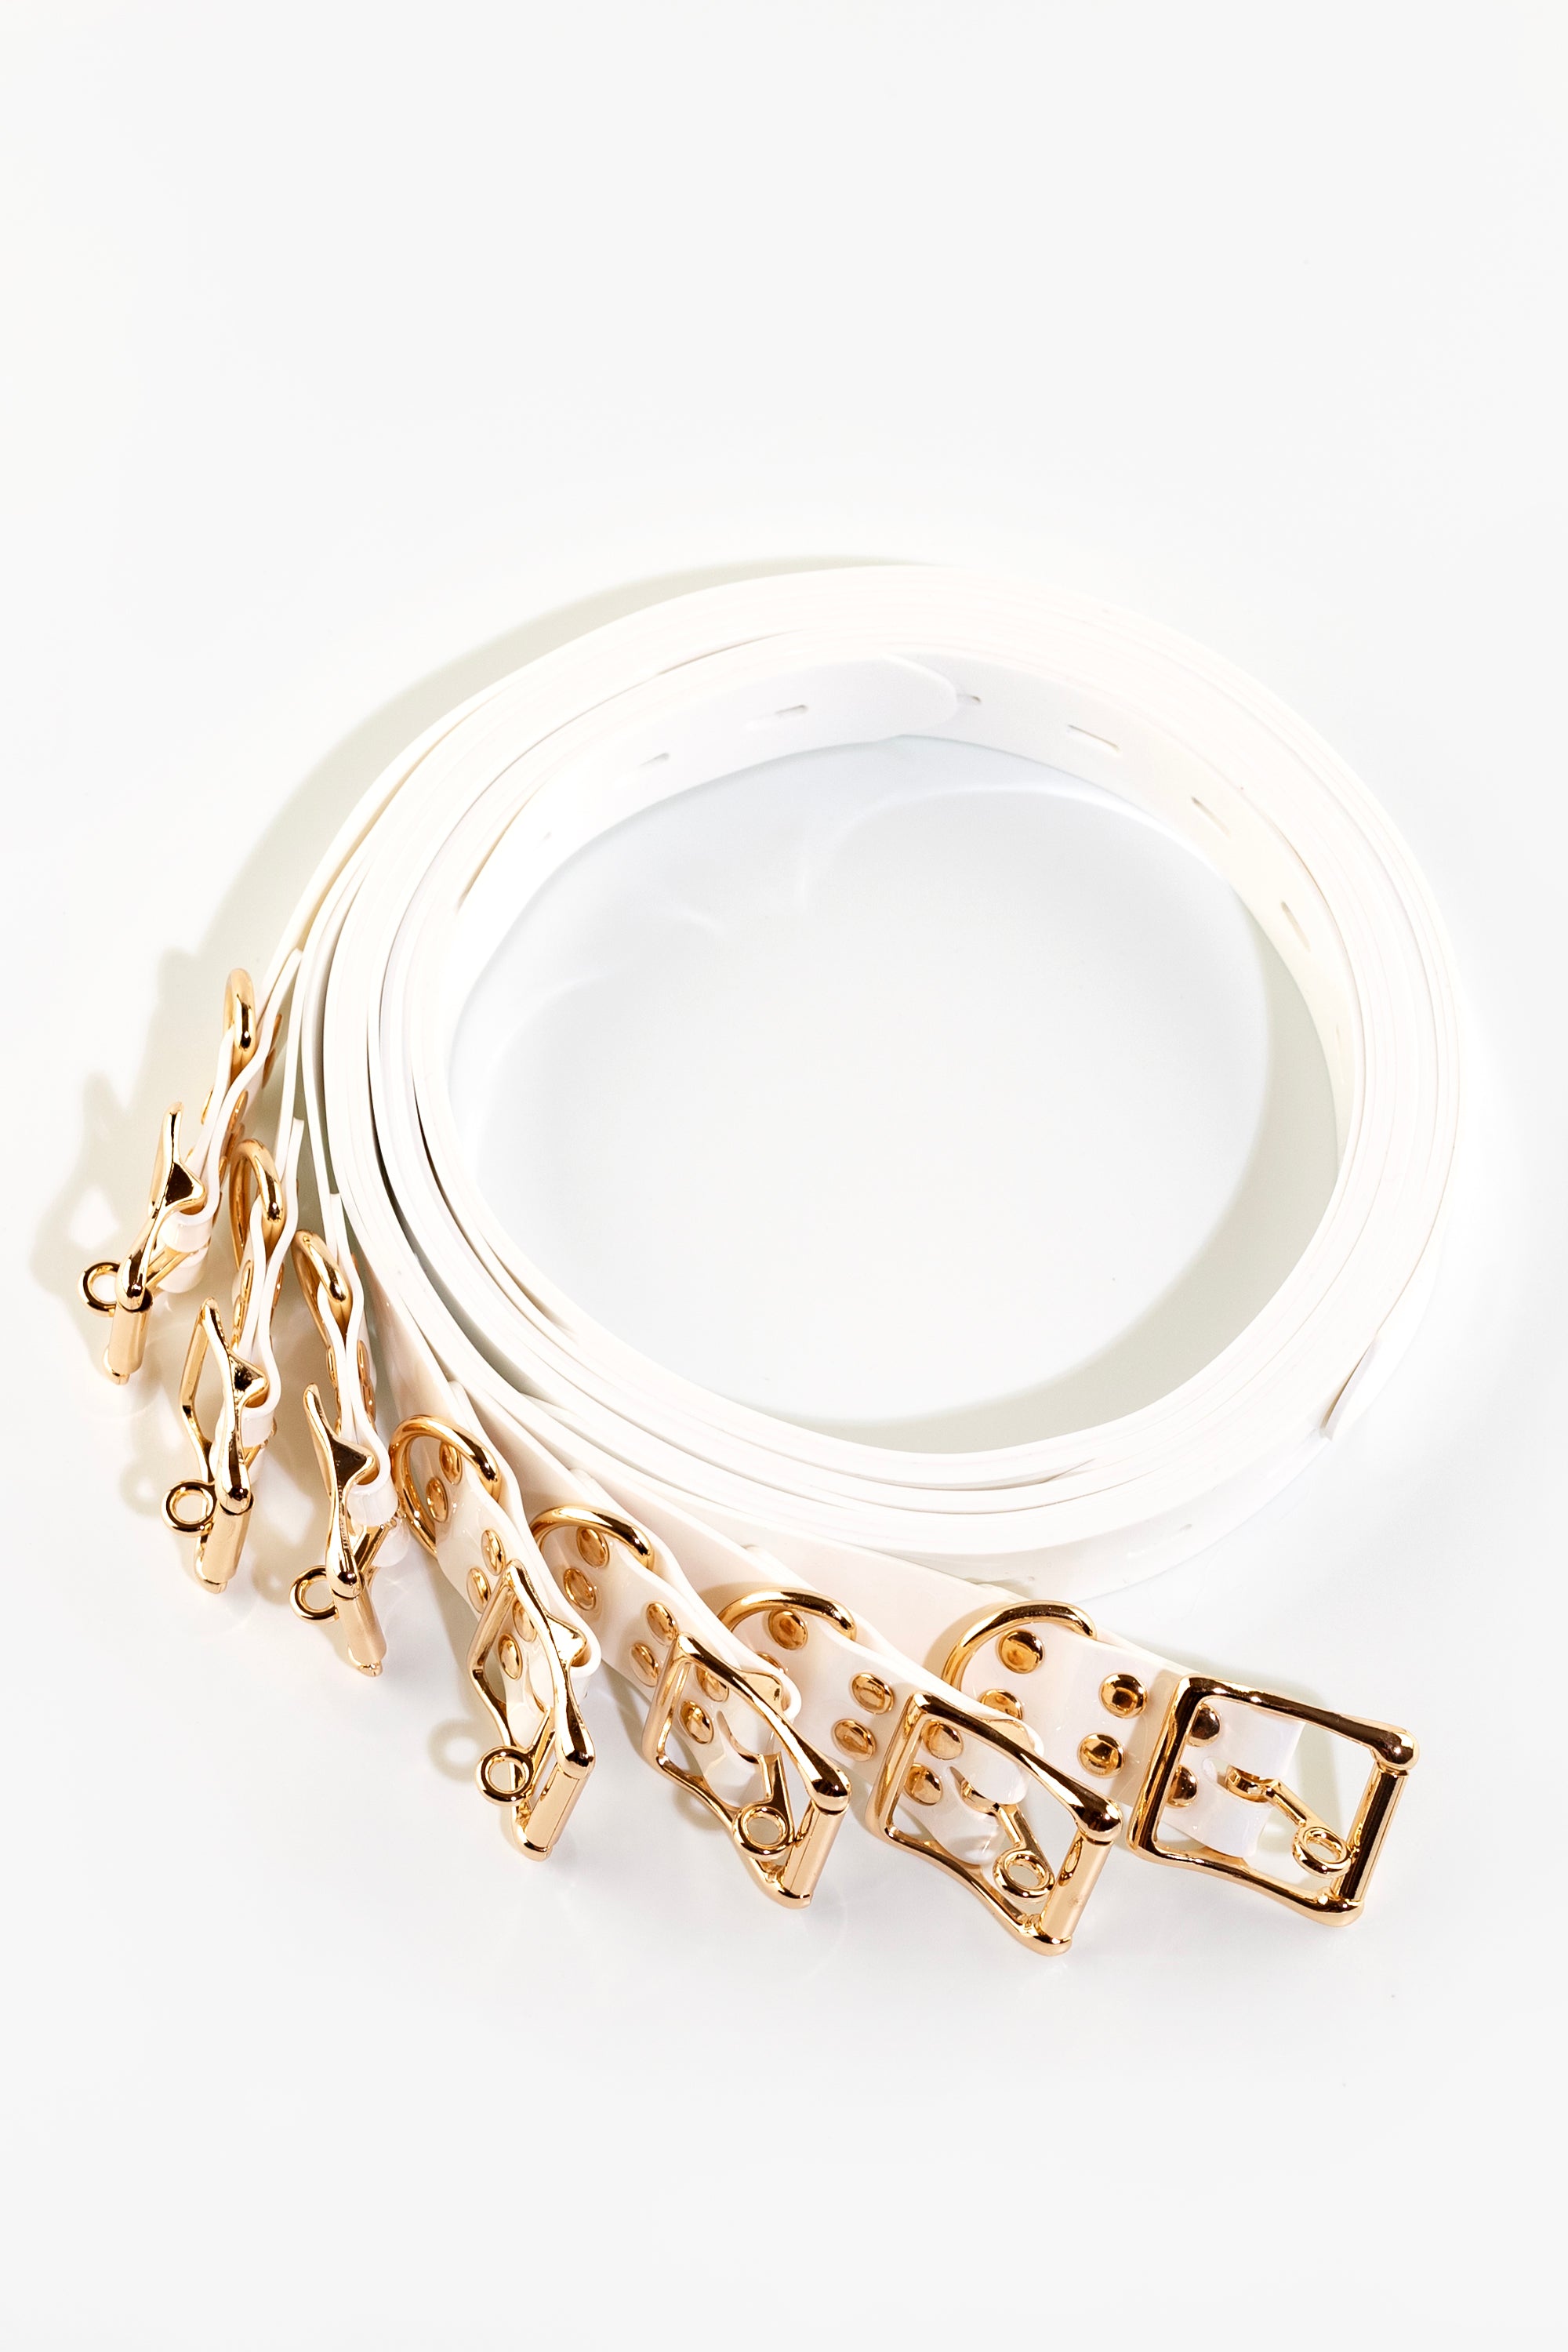 Bondage lockable straps set 25 mm, white/gold